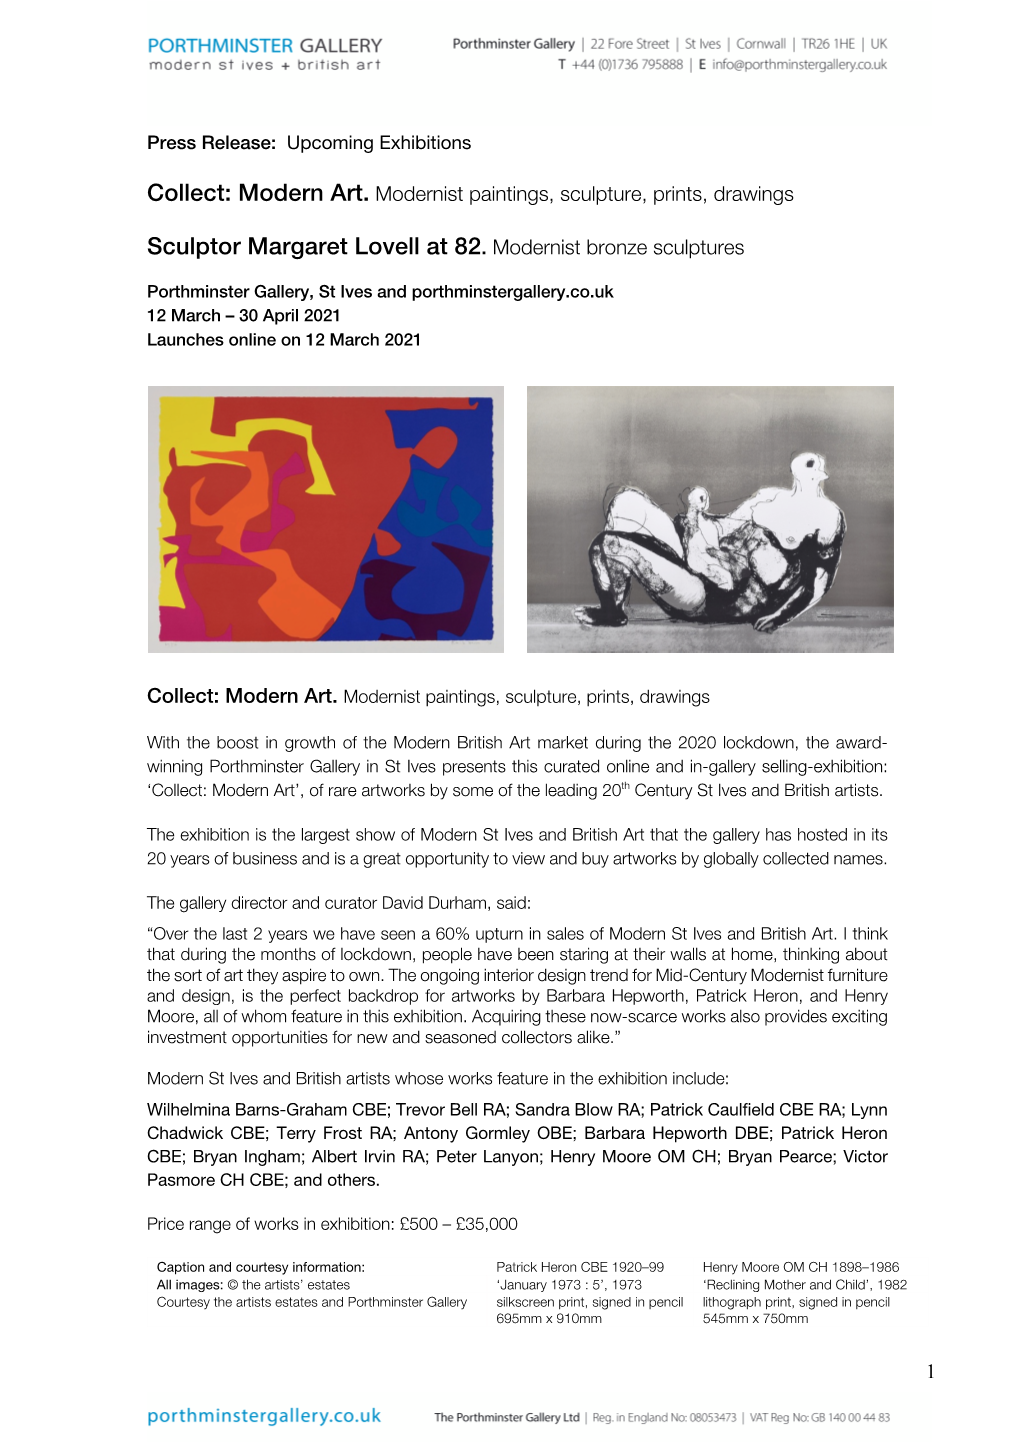 Revised Collect Modern Art & Margaret Lovell at 82 Press